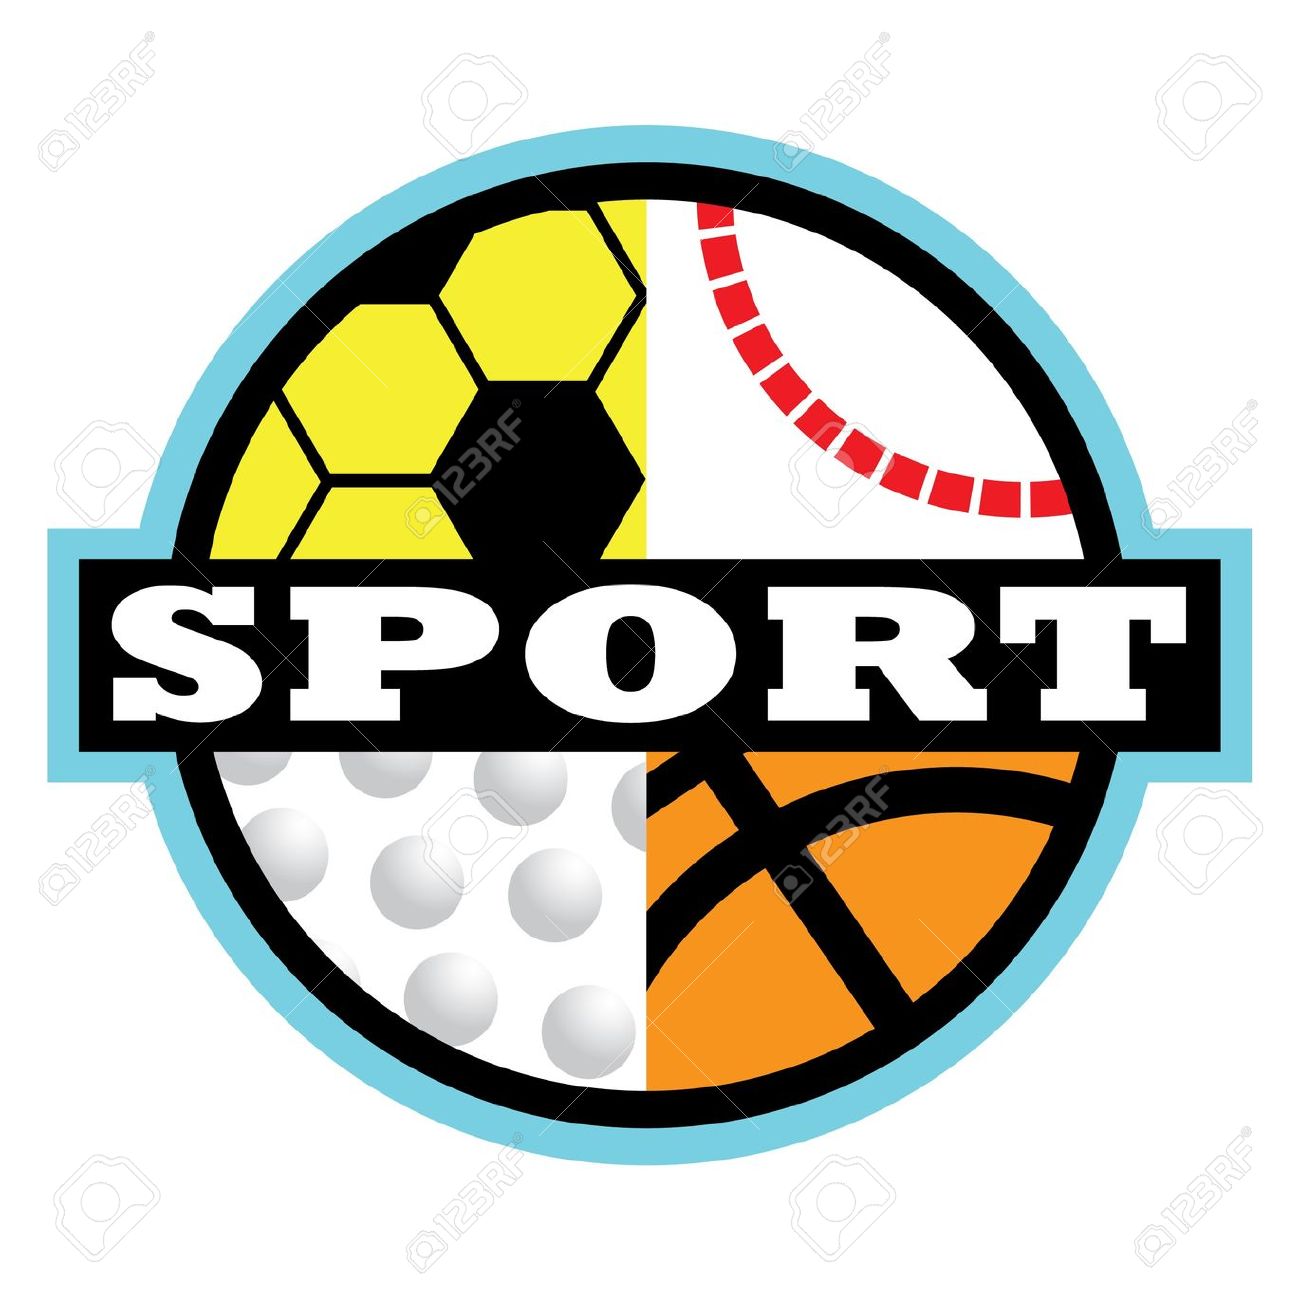 sport logo clipart - photo #1